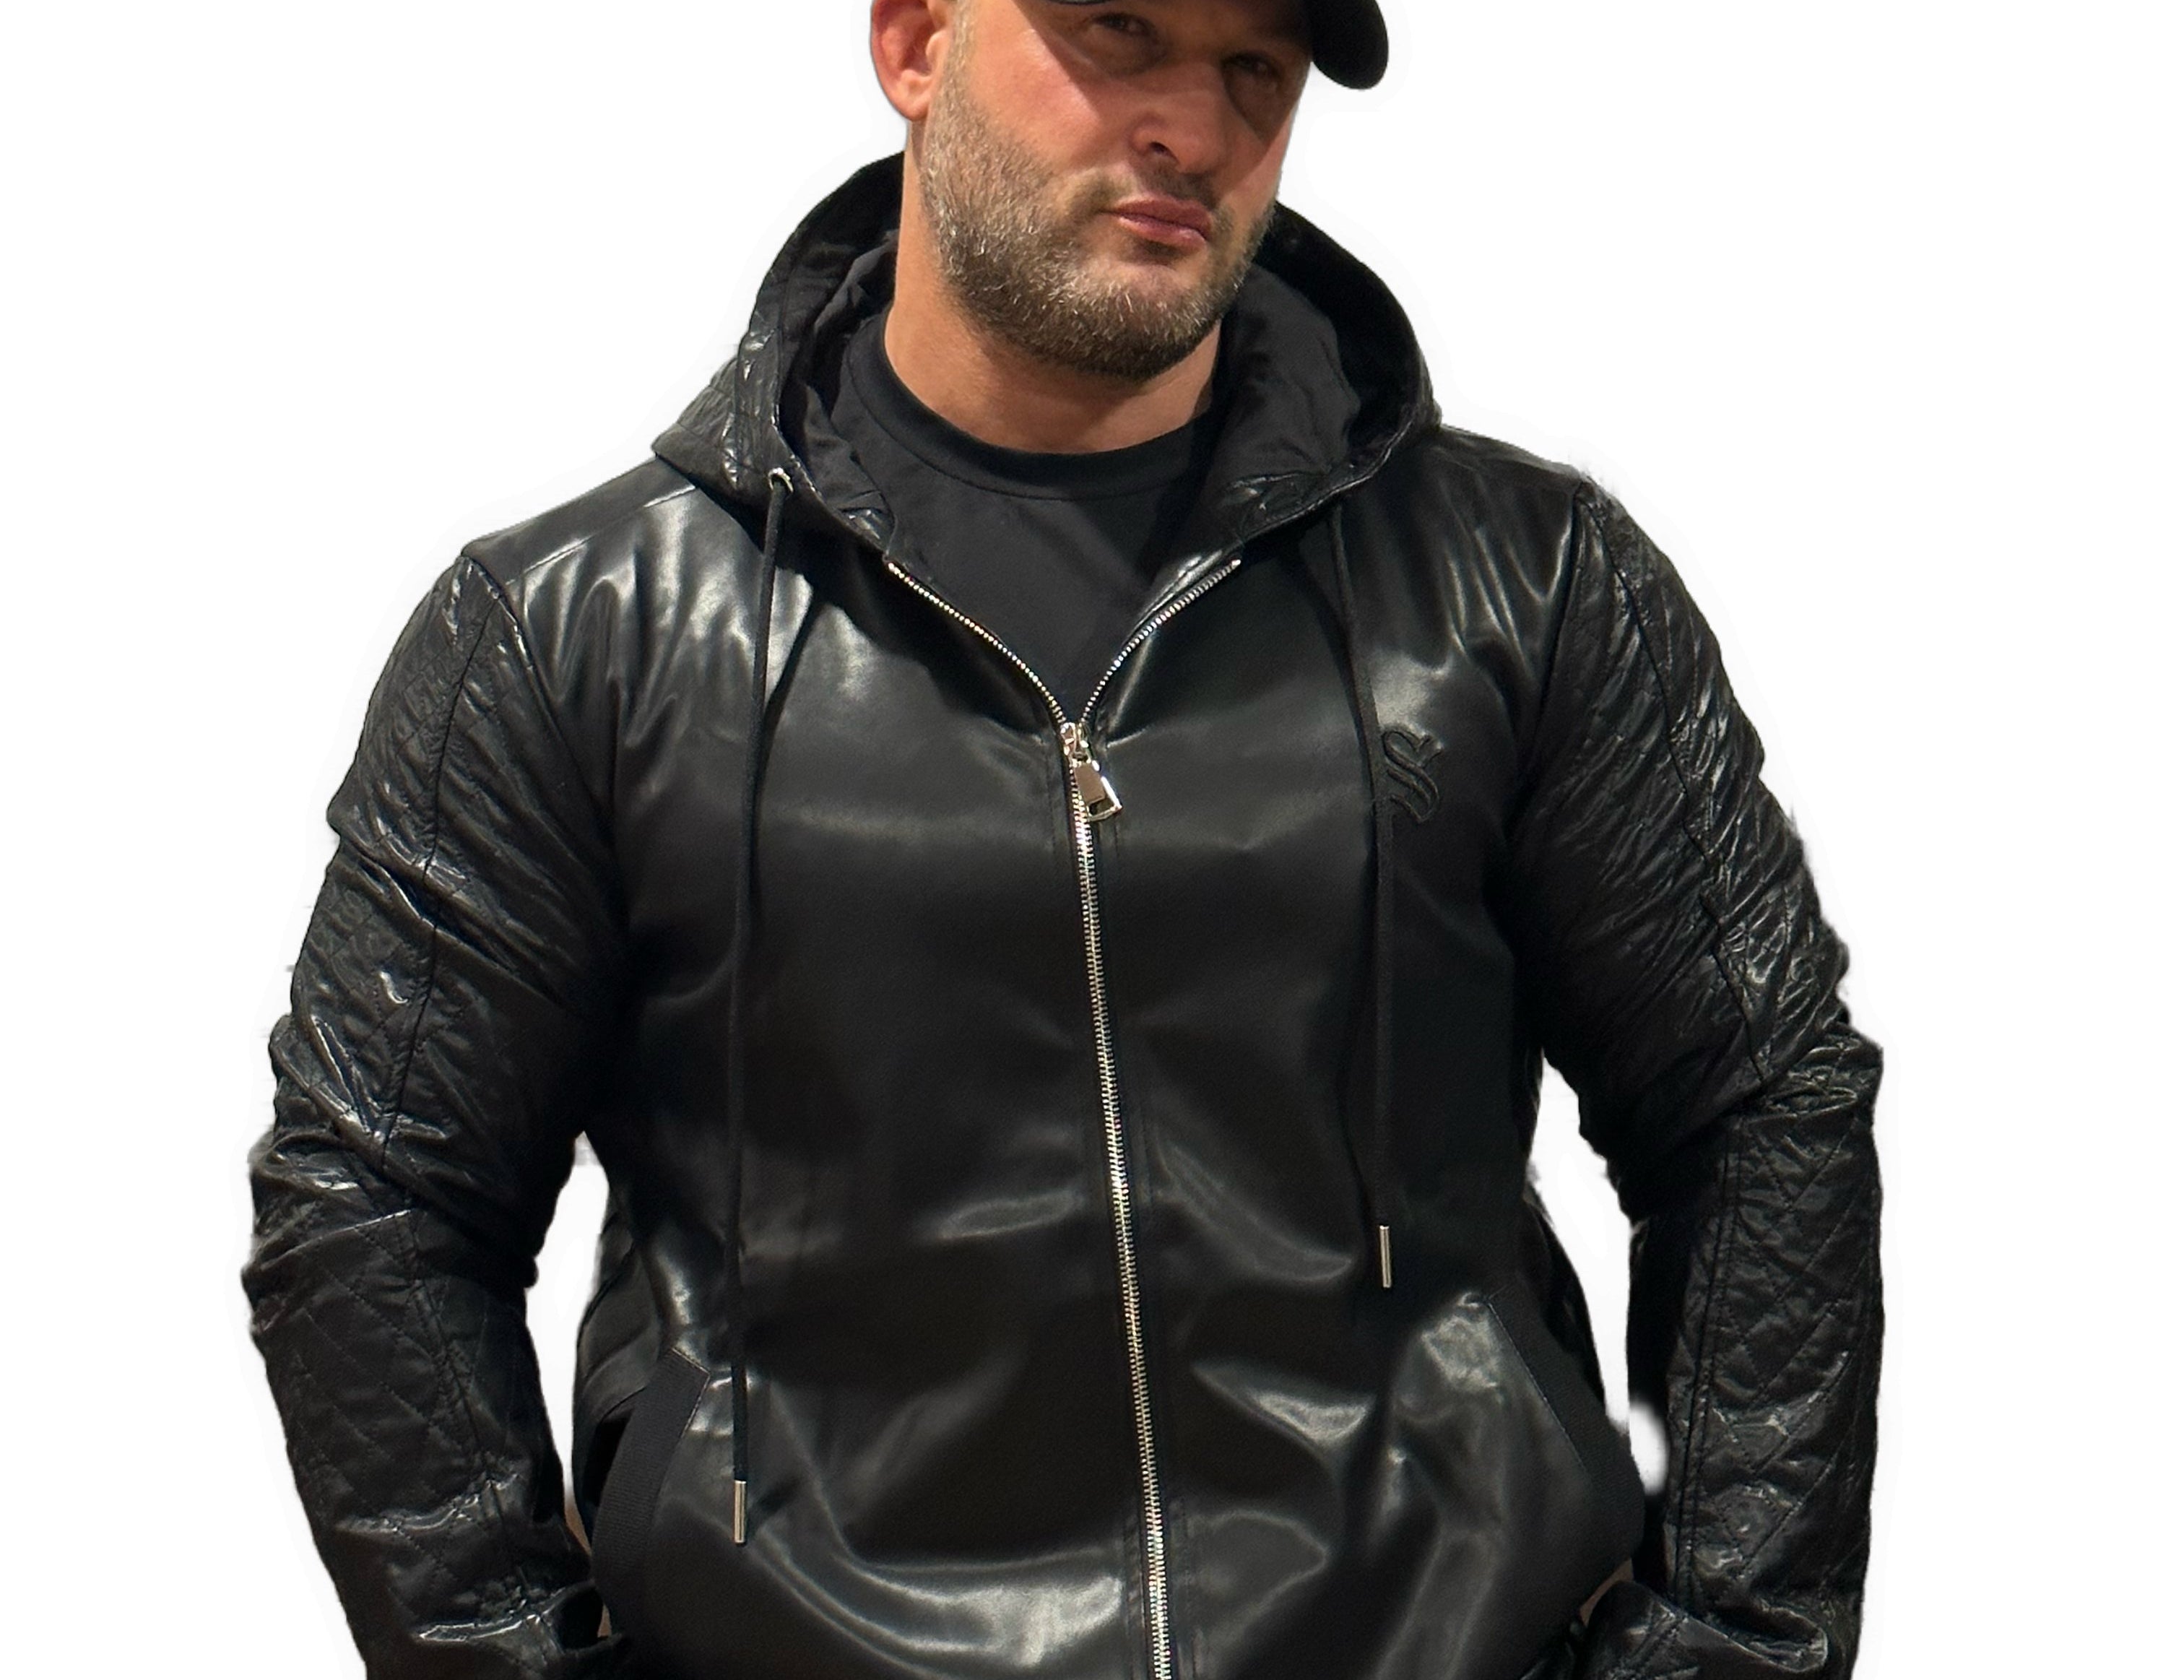 Nibor - Black Jacket for Men - Sarman Fashion - Wholesale Clothing Fashion Brand for Men from Canada